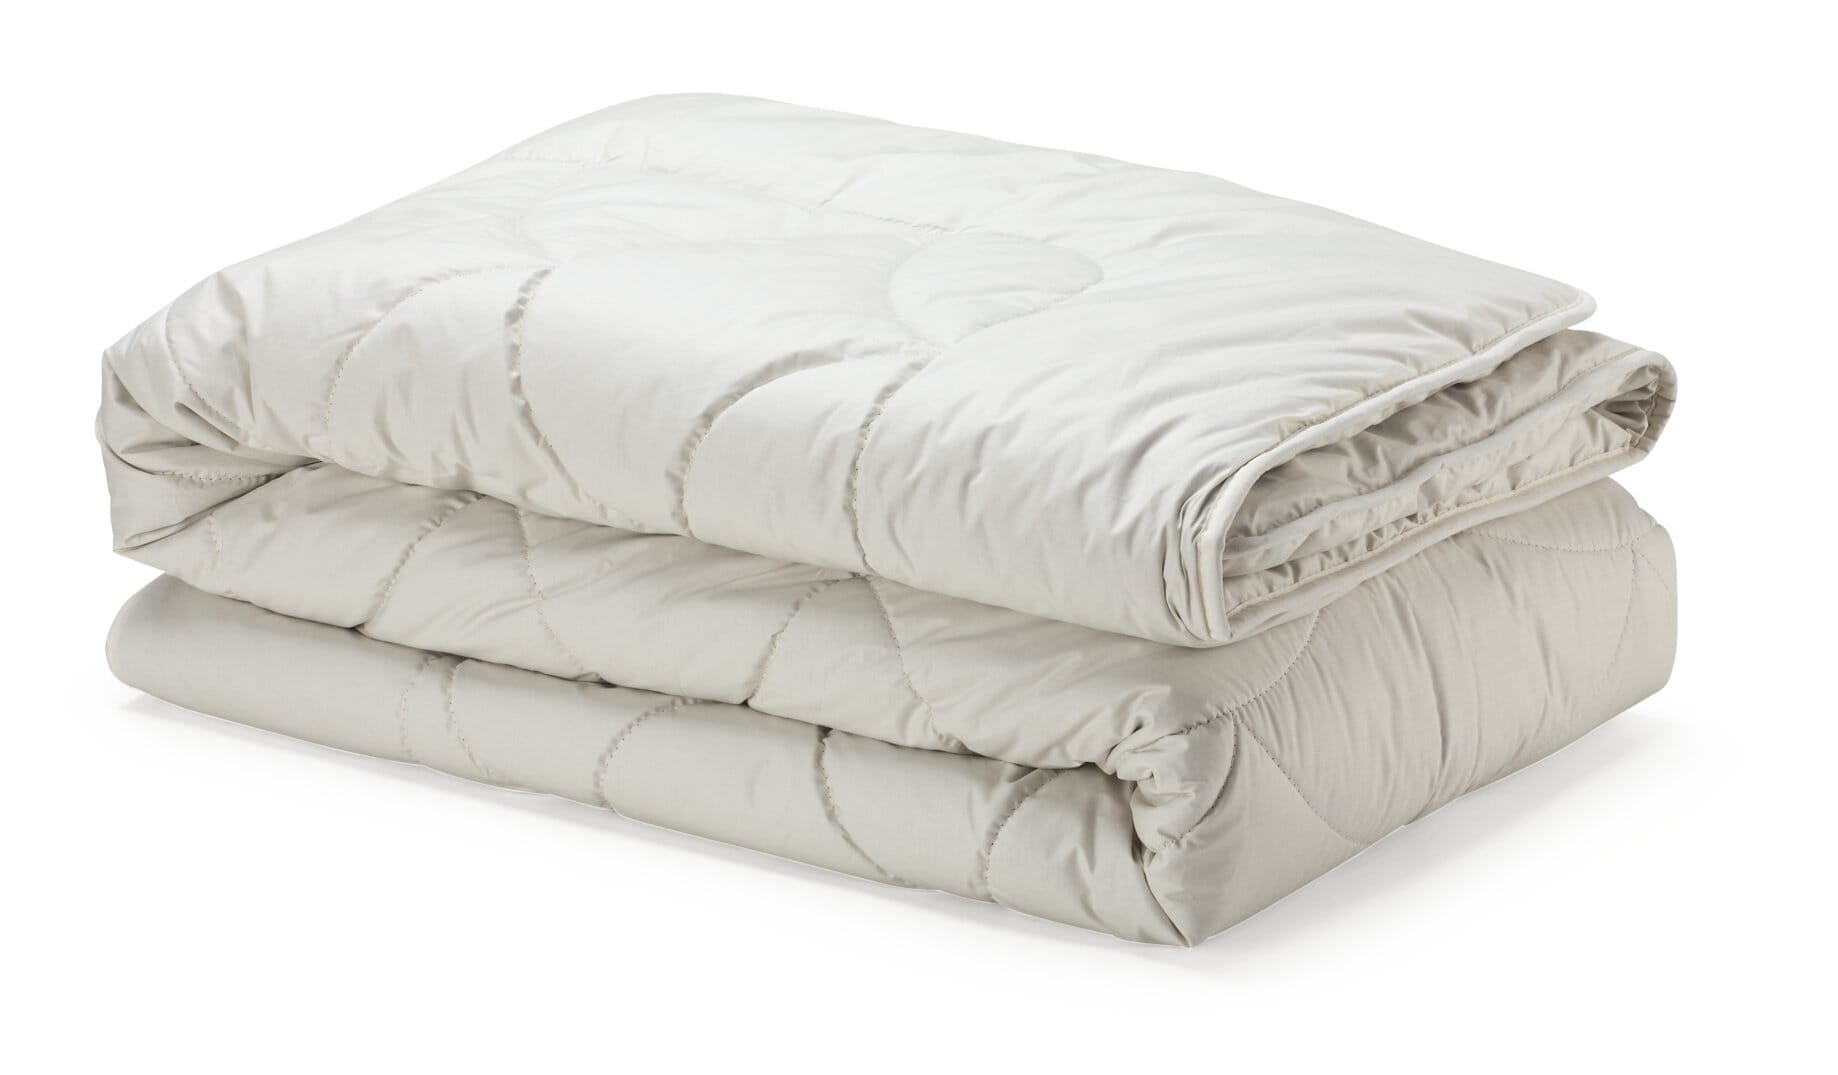 Duvet Cashmere Cashmere Blanket Bedspread Wool Blanket Cover Made in Germany 